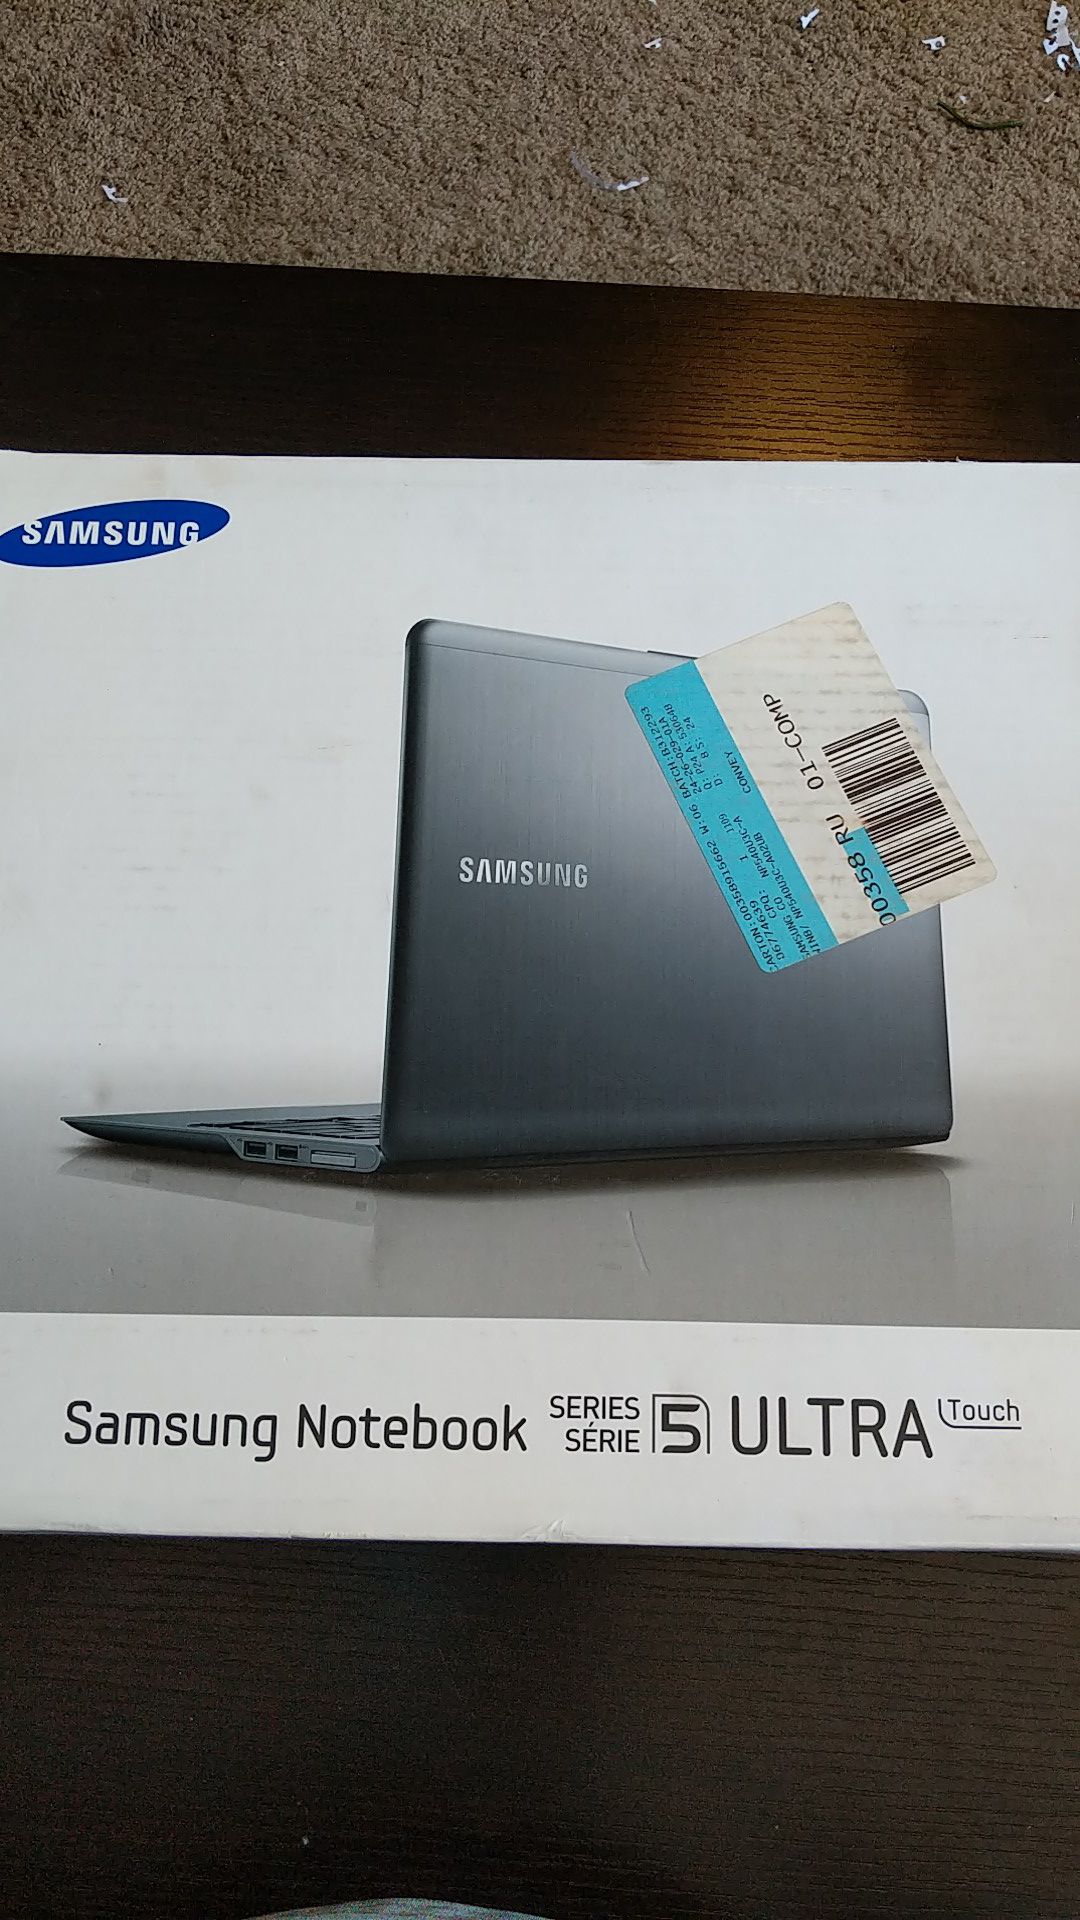 Samsung Notebook series 5 ultra touch. Computer, laptop